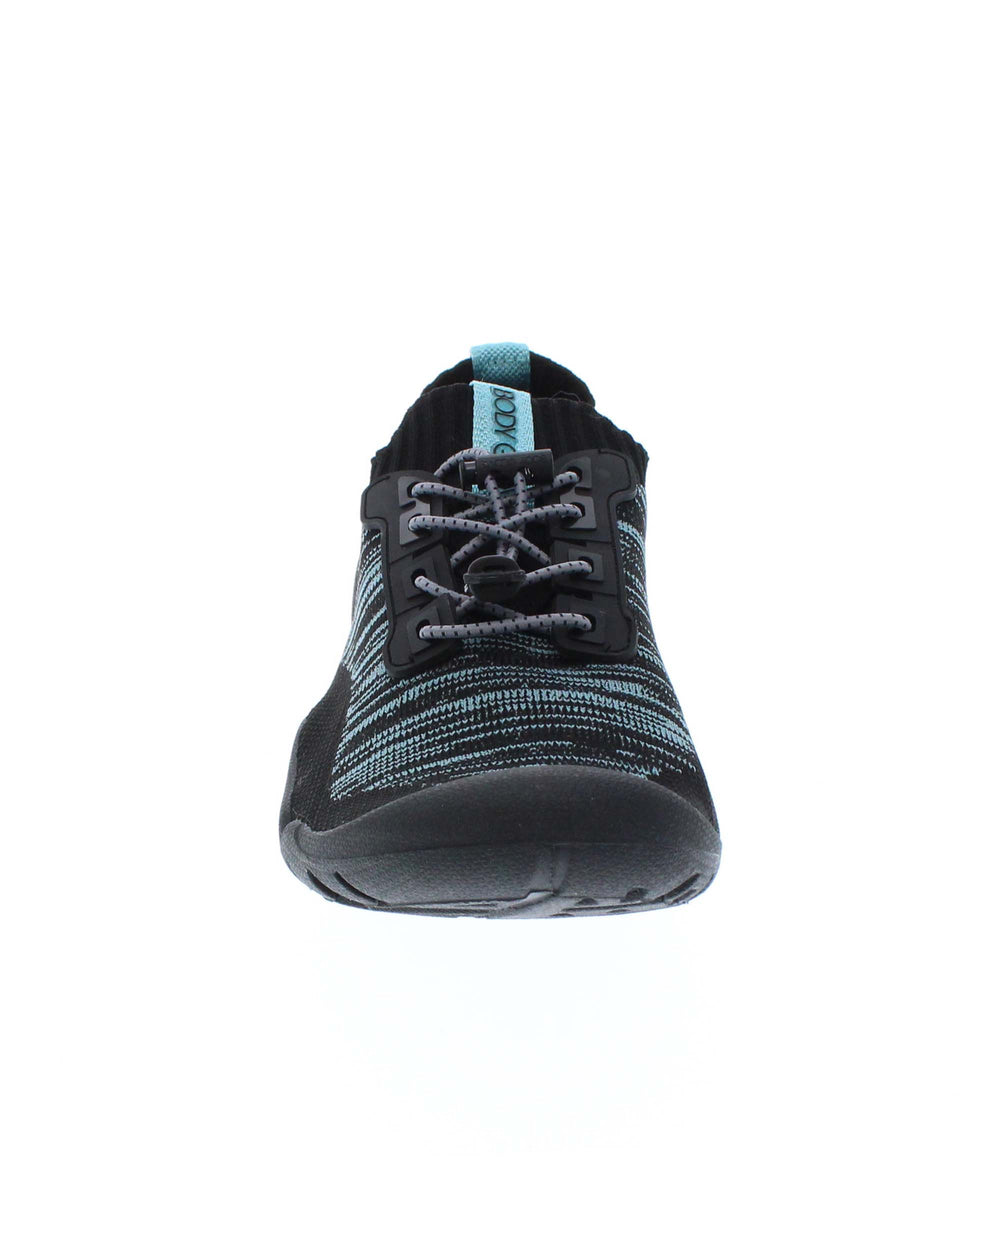 Women's Hydro Knit Siphon Water Shoes - Black/Blue